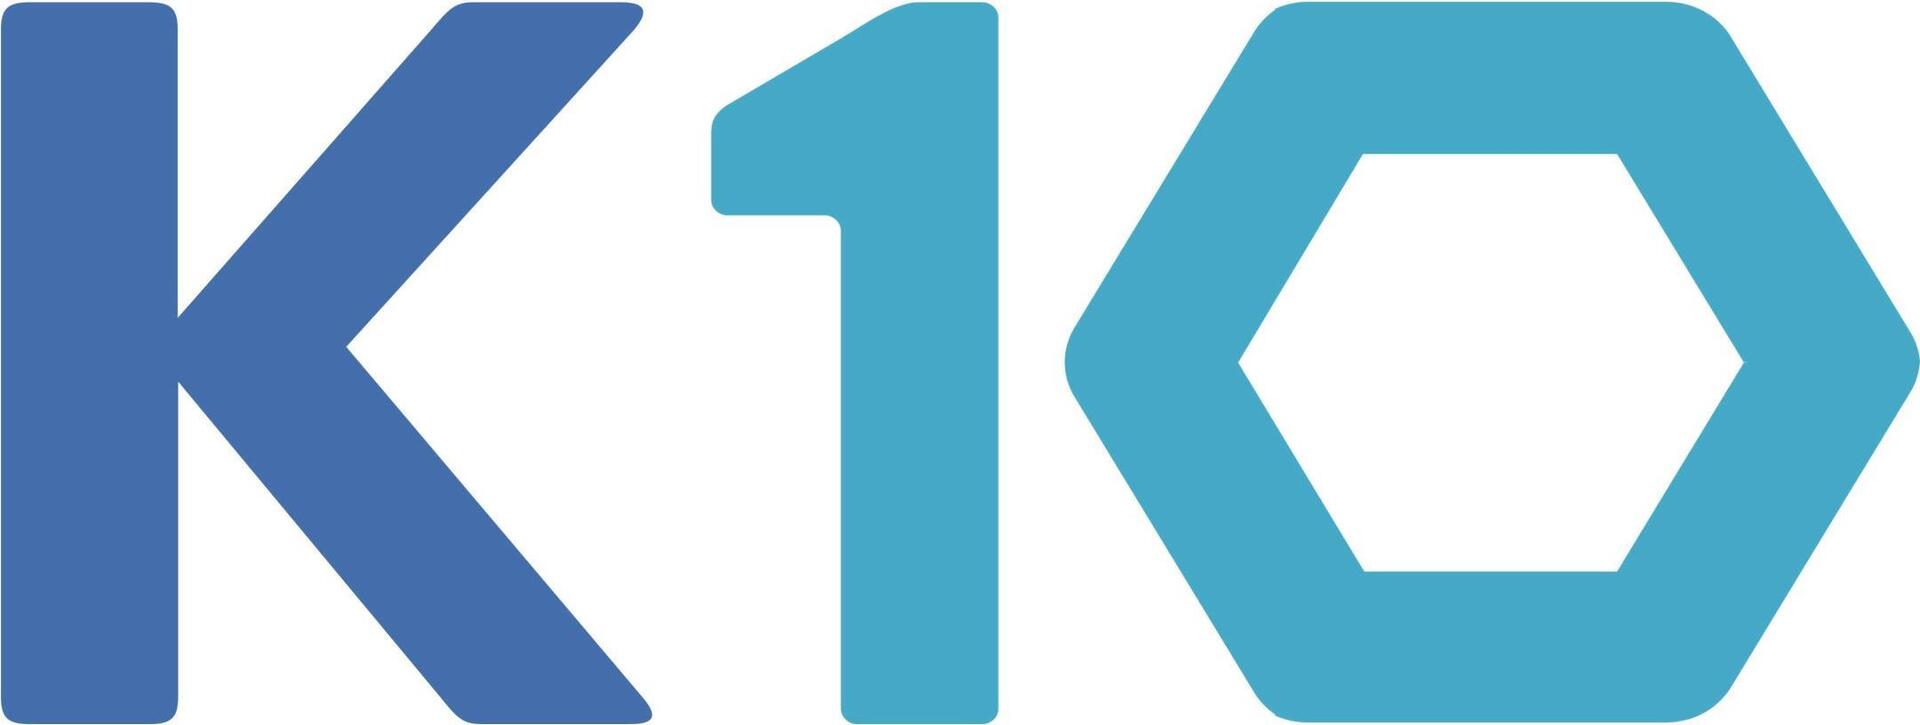 Veeam 3rd Year Payment for renewing Kubernetes Backup and DR with Kasten by Veeam. Kasten K10 Enterprise Platform. 3 Years Subscription Annual Billing & Kasten Basic Support. (V-K10ENT-0N-SA3R3-00)